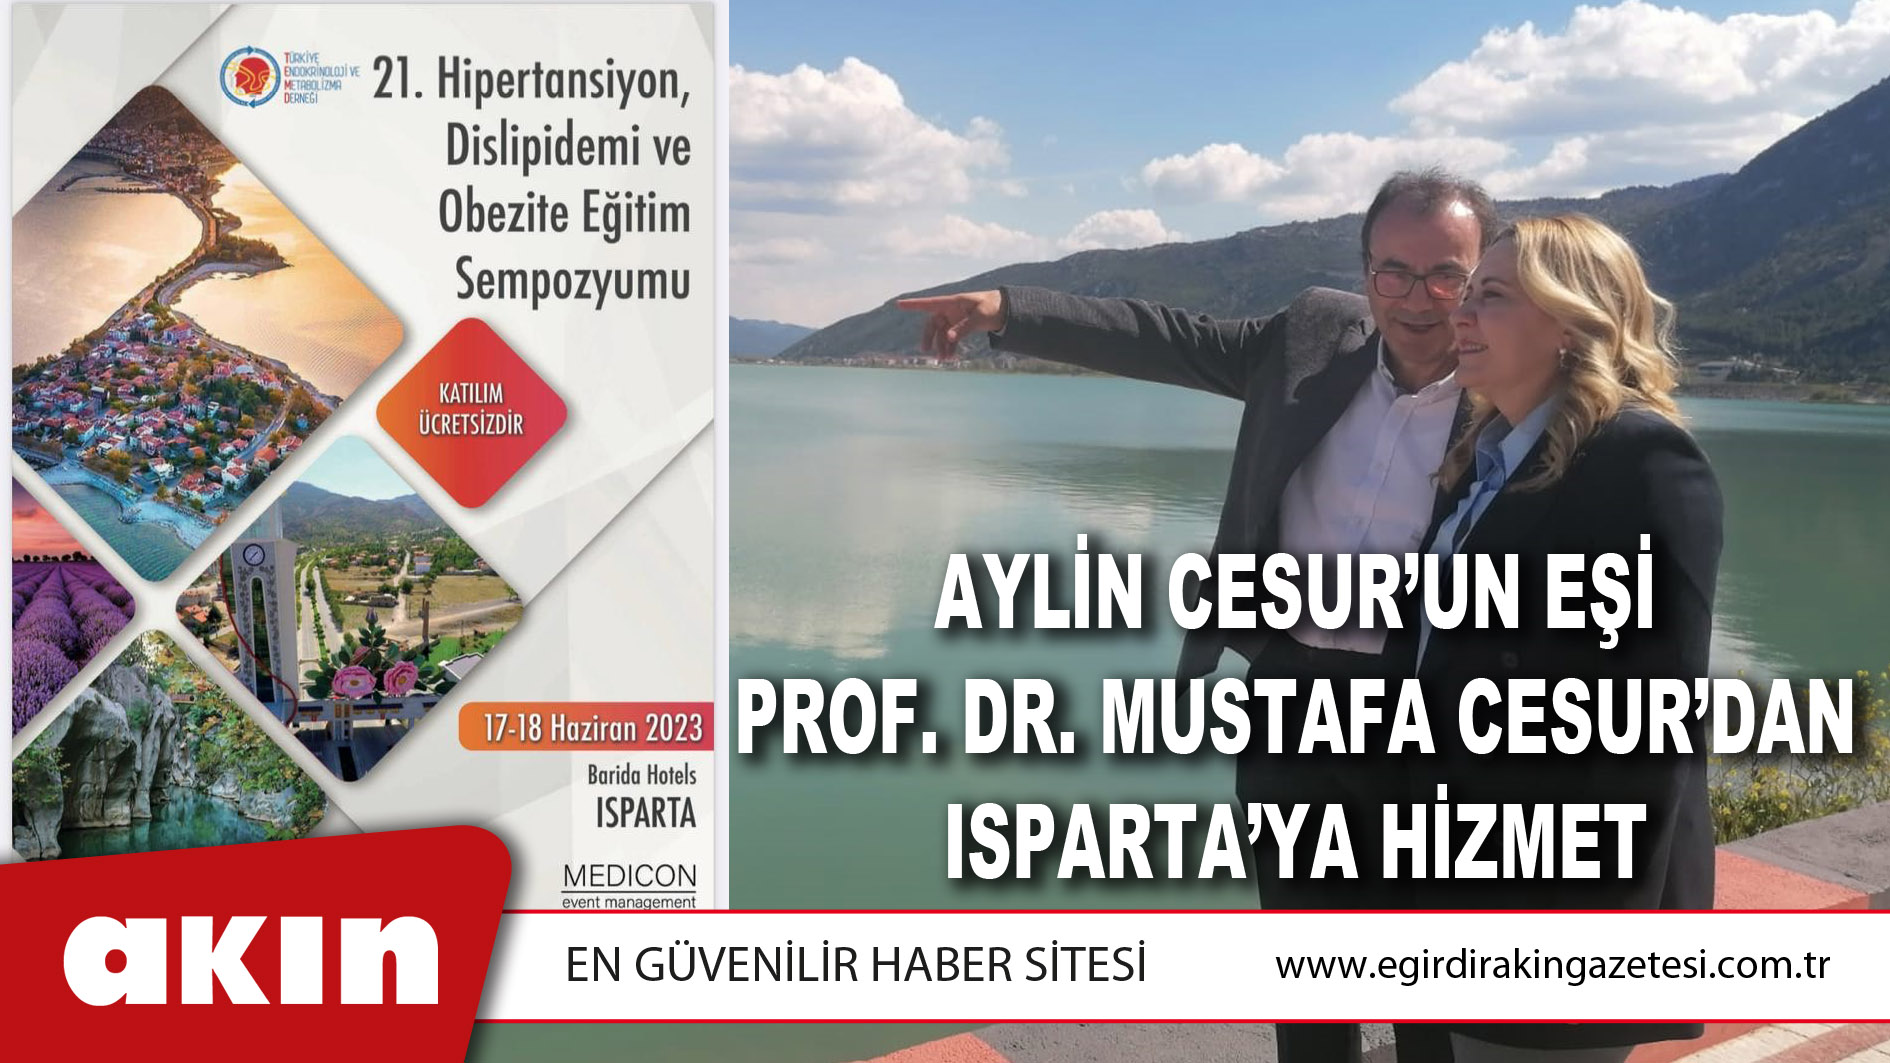 Aylin Cesur’un Eşi Prof. Dr. Mustafa Cesur’dan Isparta’ya Hizmet